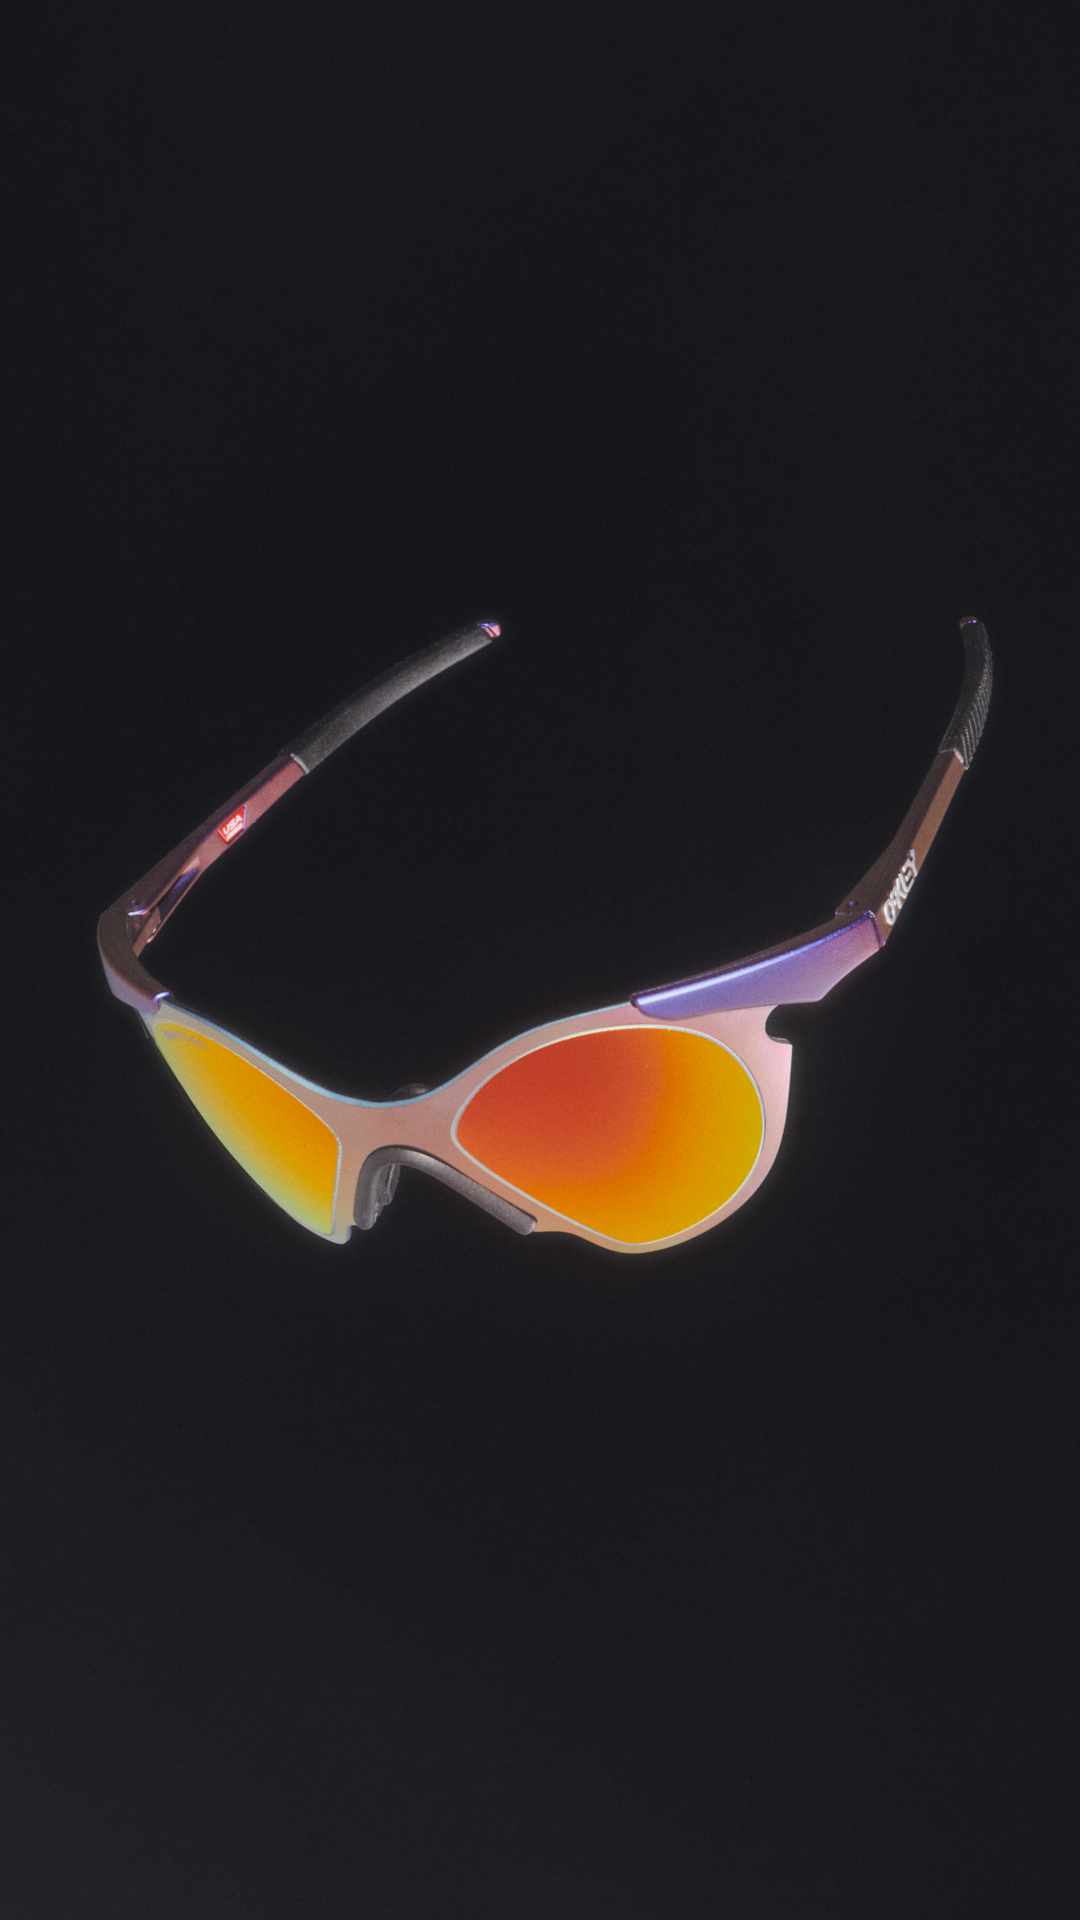 Photos of Brain Dead & Oakley's collaborative Sub Zero & Eye Jacket sunglasses and Paguro Slides